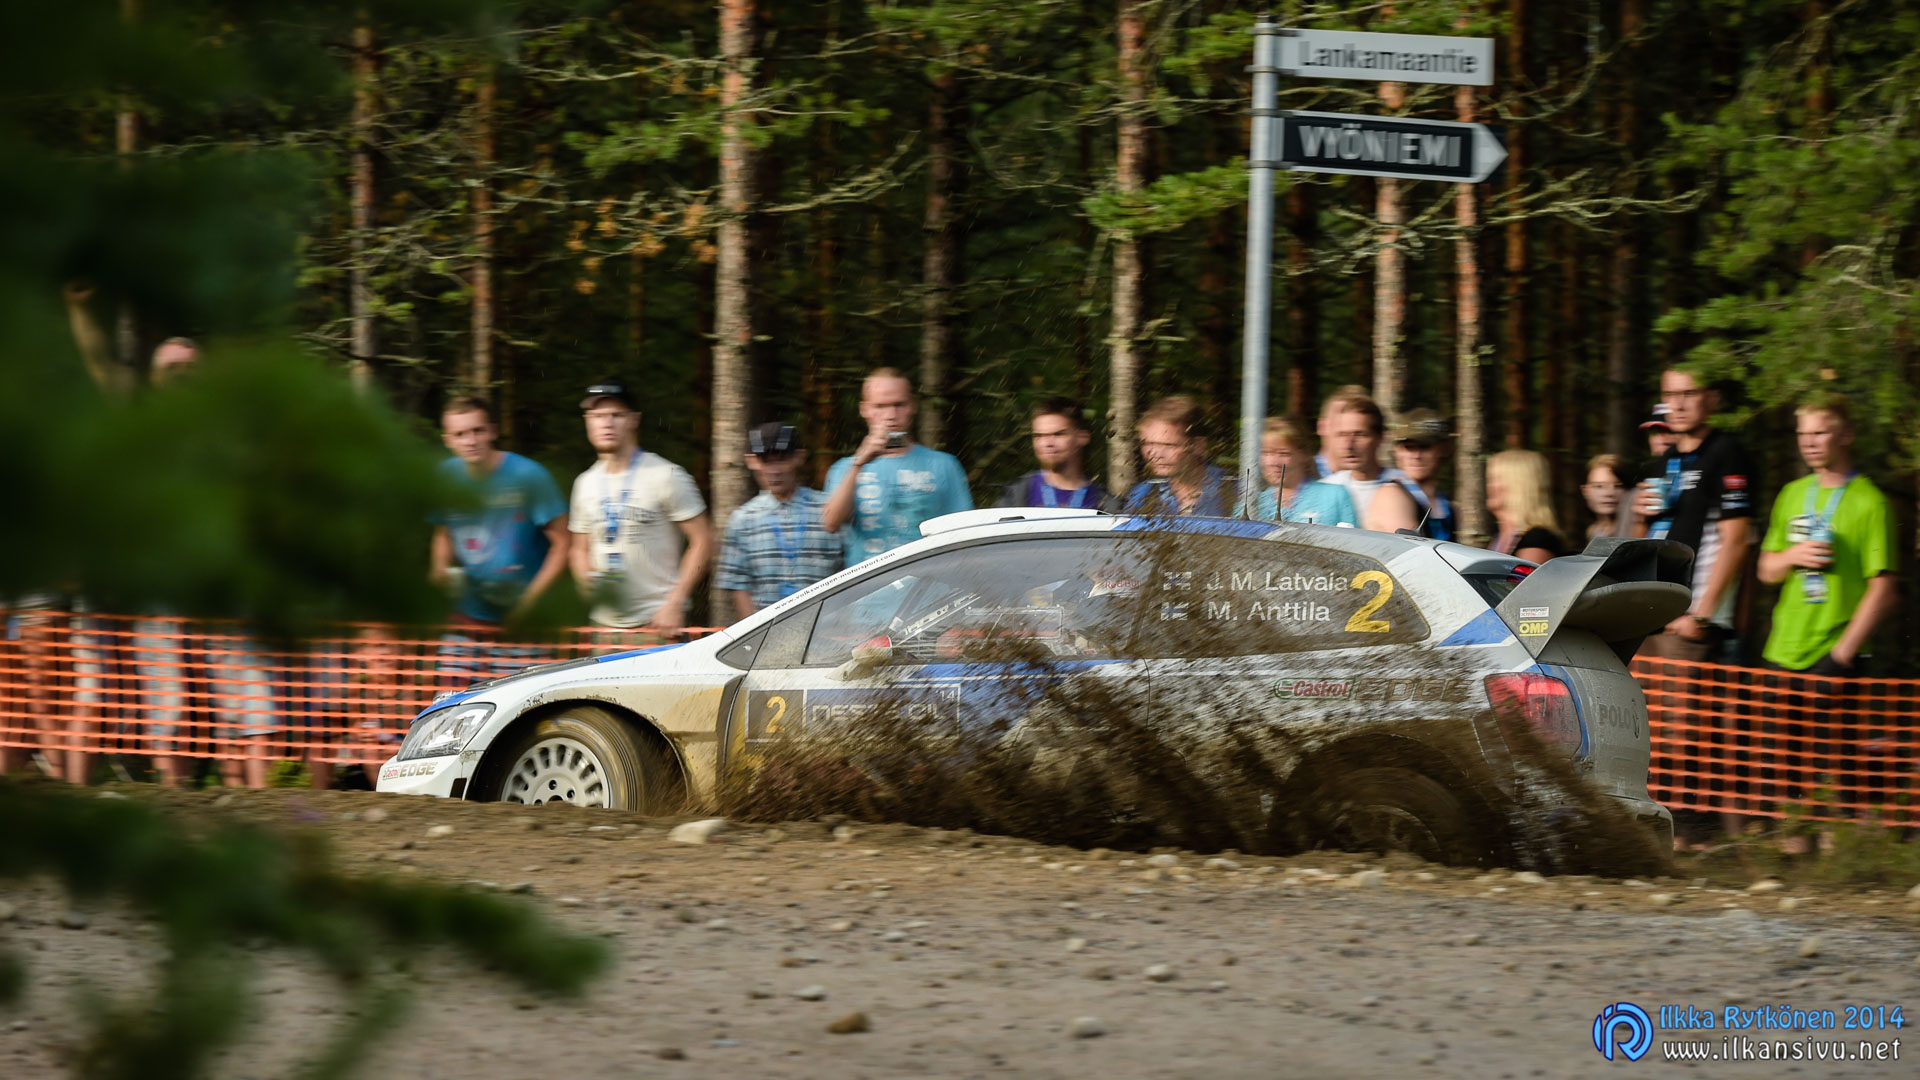 1/400 s, f/7,1, ISO 500, 220 mm ( AF-S Nikkor 80–400mm f/4.5-5.6G ED VR), Jari-Matti Latvala, Neste Oil Rally Finland 2014